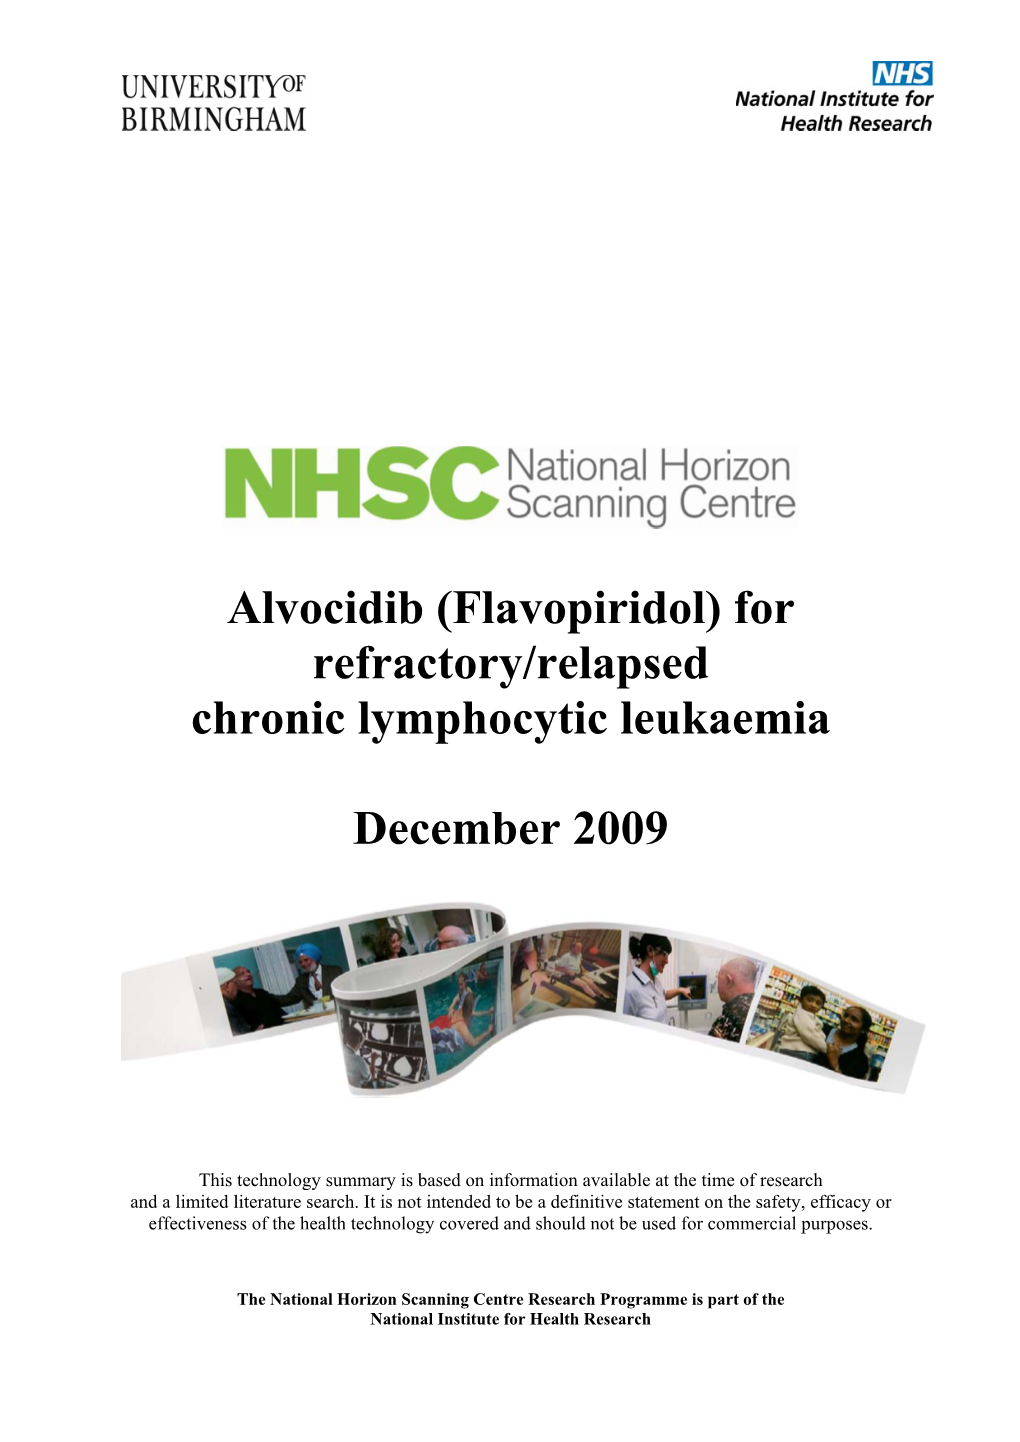 Alvocidib (Flavopiridol) for Refractory/Relapsed Chronic Lymphocytic Leukaemia